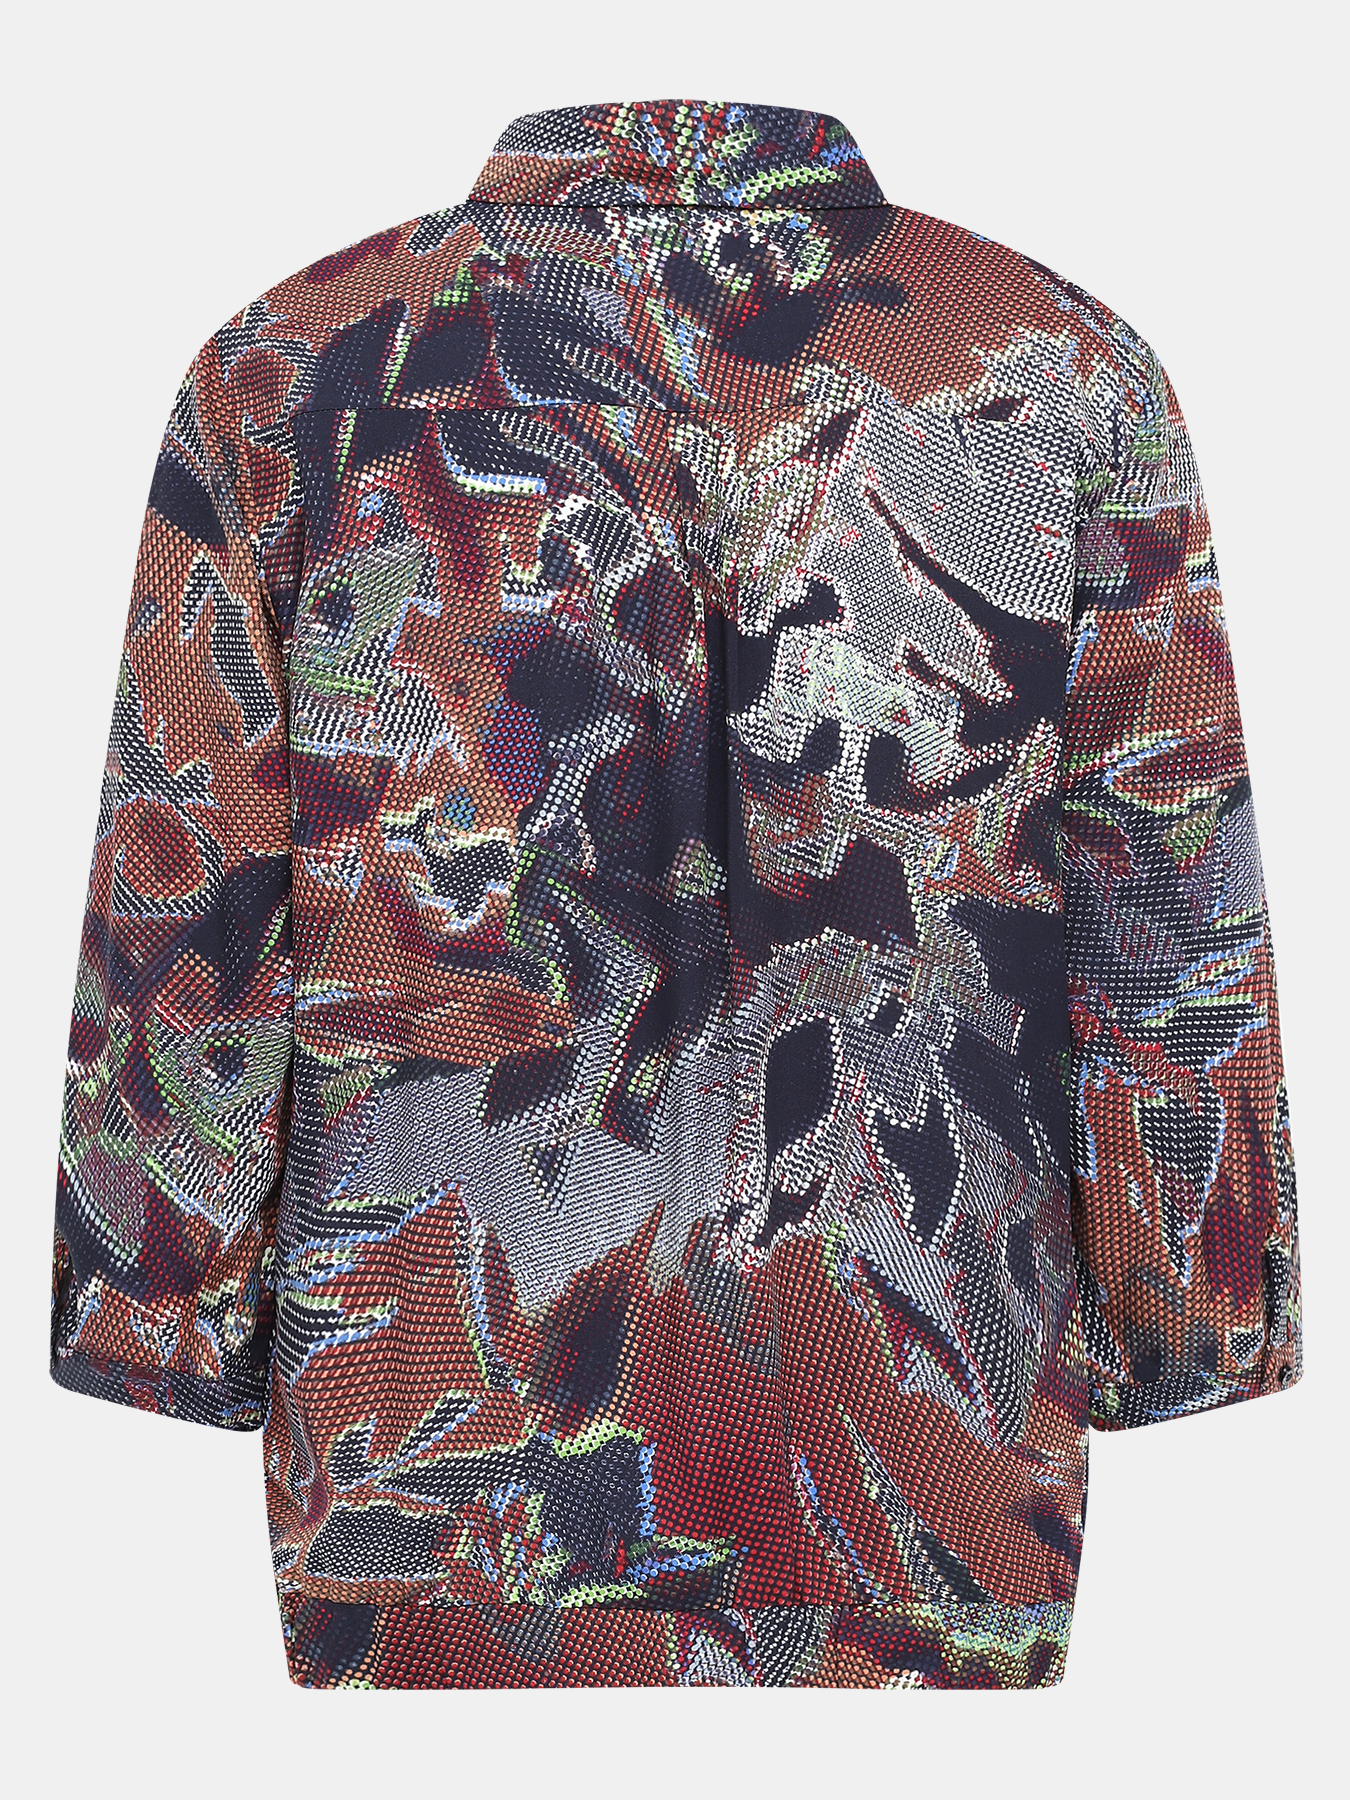 Блузка Betty Barclay 428283-025, цвет мультиколор, размер 54 - фото 5